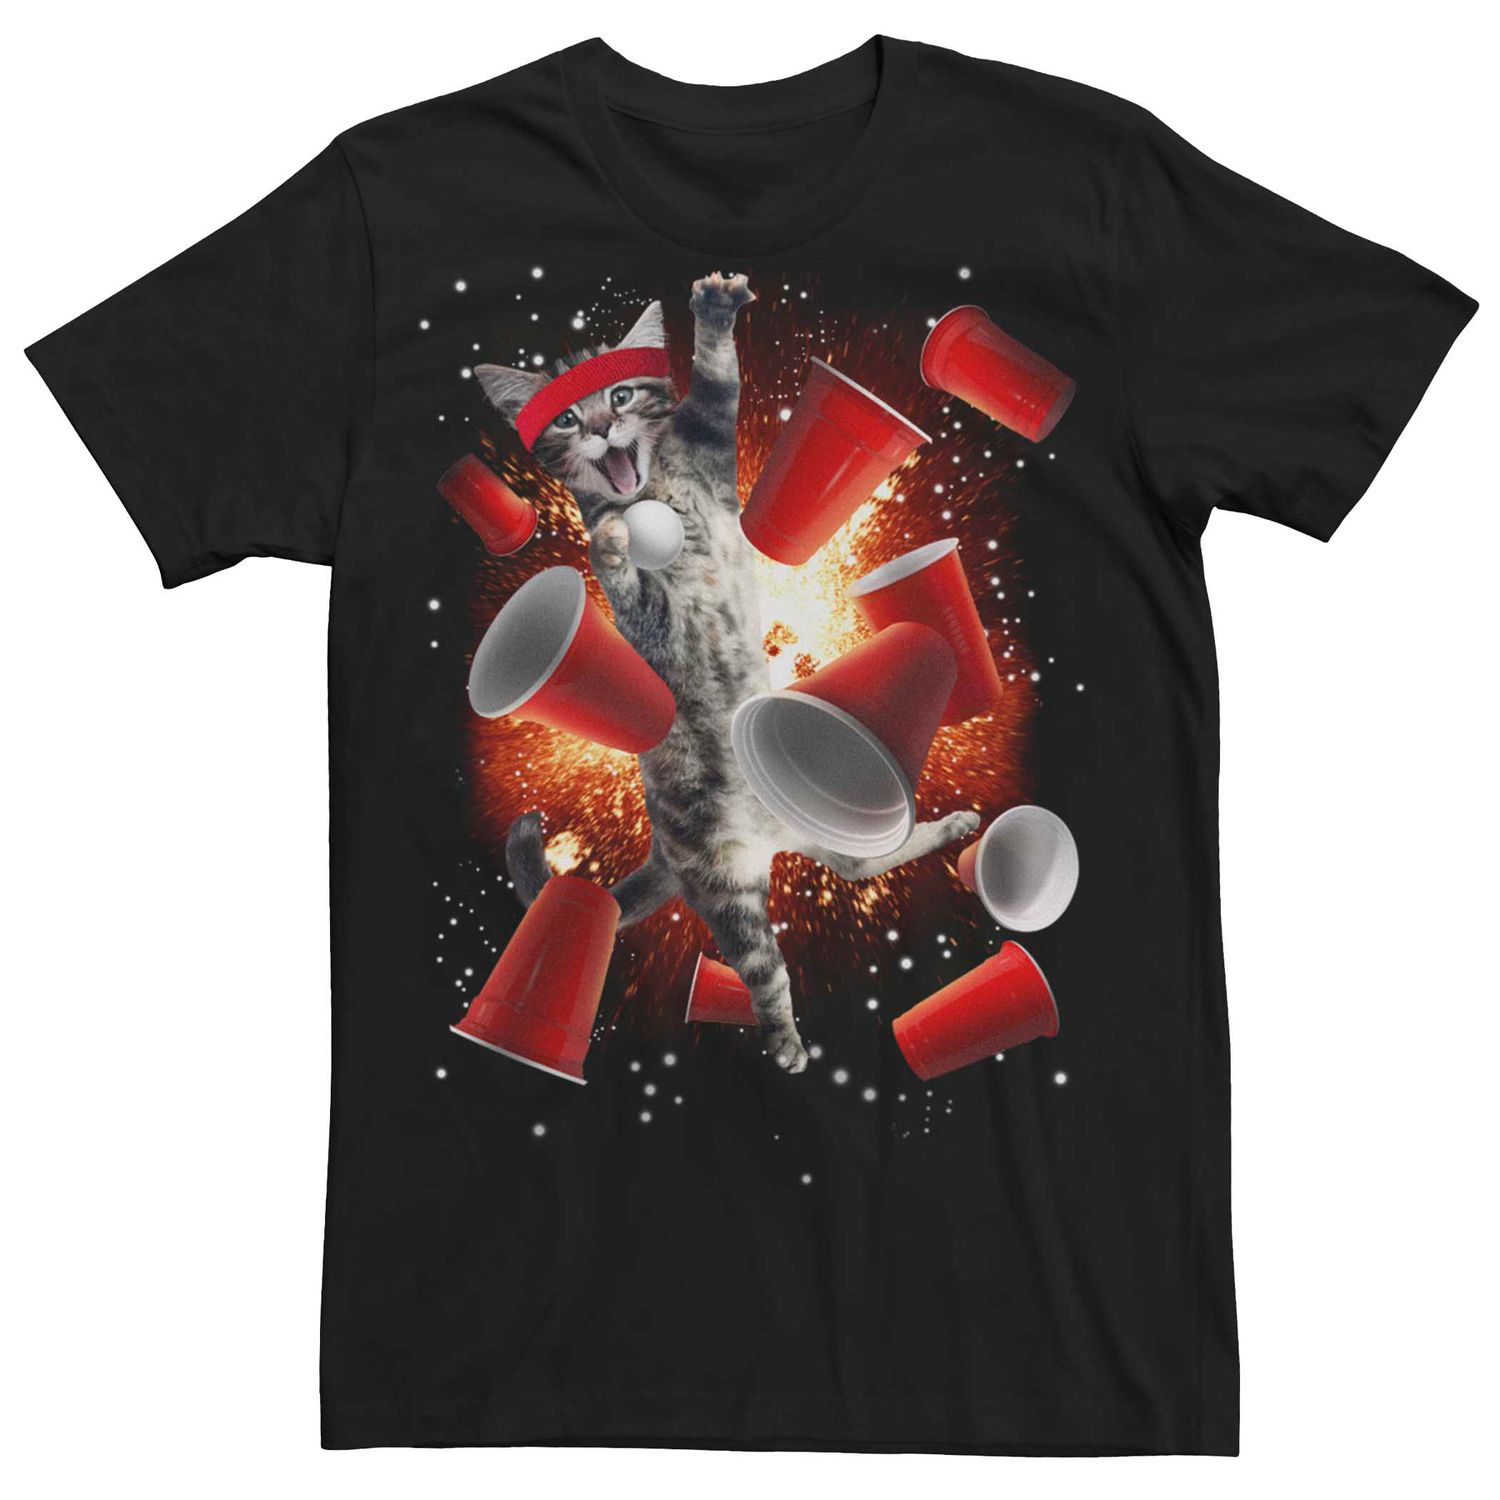 Мужская футболка с рисунком котенка Beer Pong Pong Explosion Licensed Character